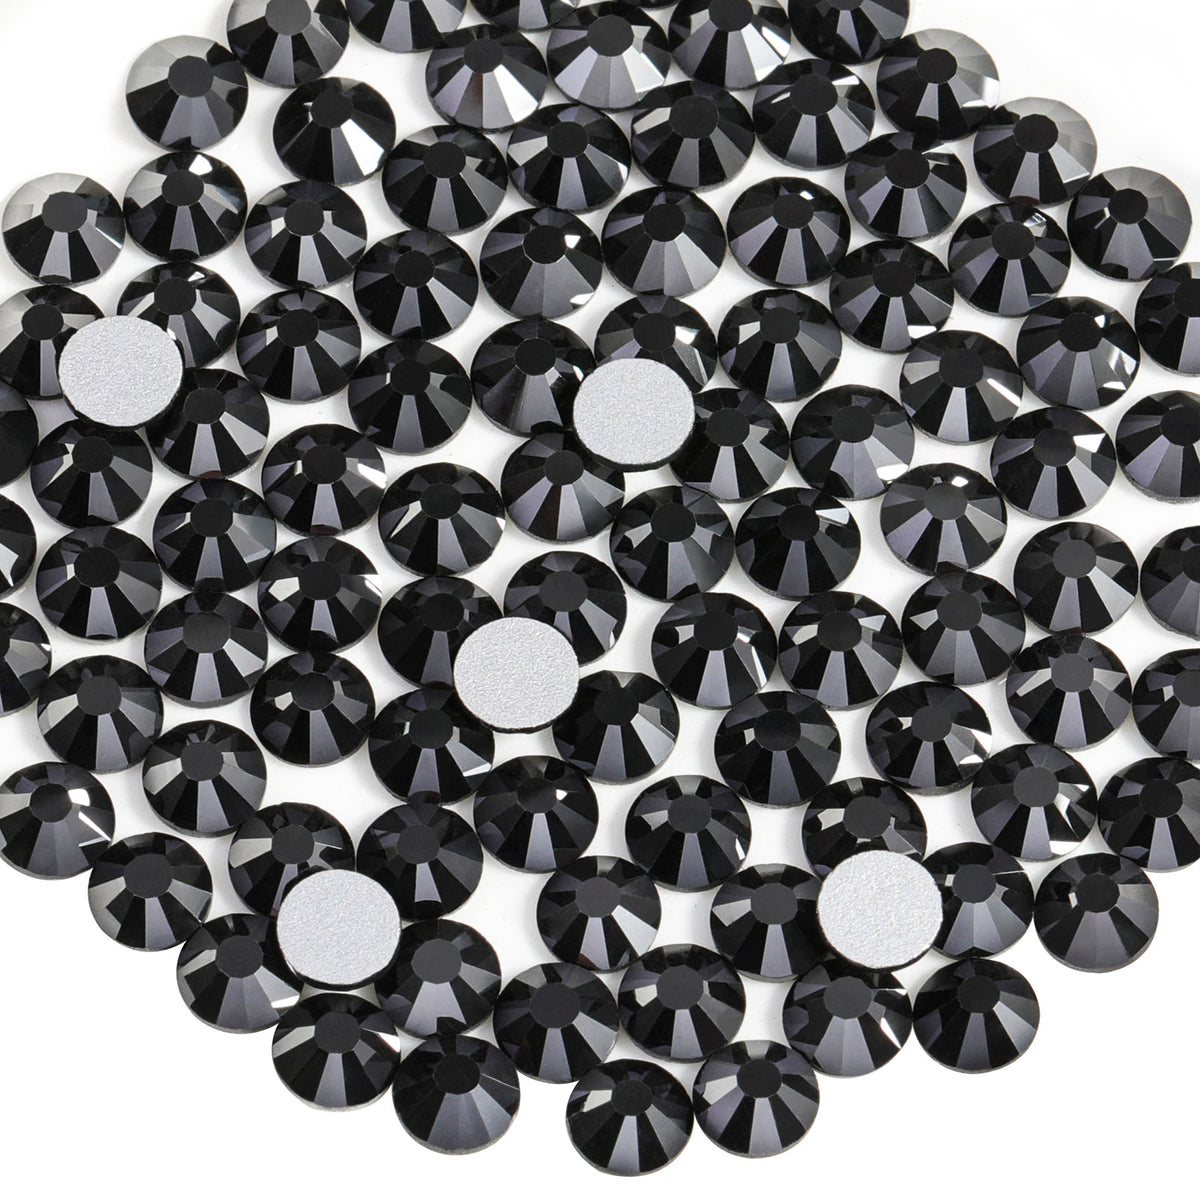  Beadsland Hotfix Rhinestones, 2880pcs Flatback Crystal  Rhinestones for Crafts Clothes DIY Decoration,Silver Hematite, SS8,  2.3-2.5mm